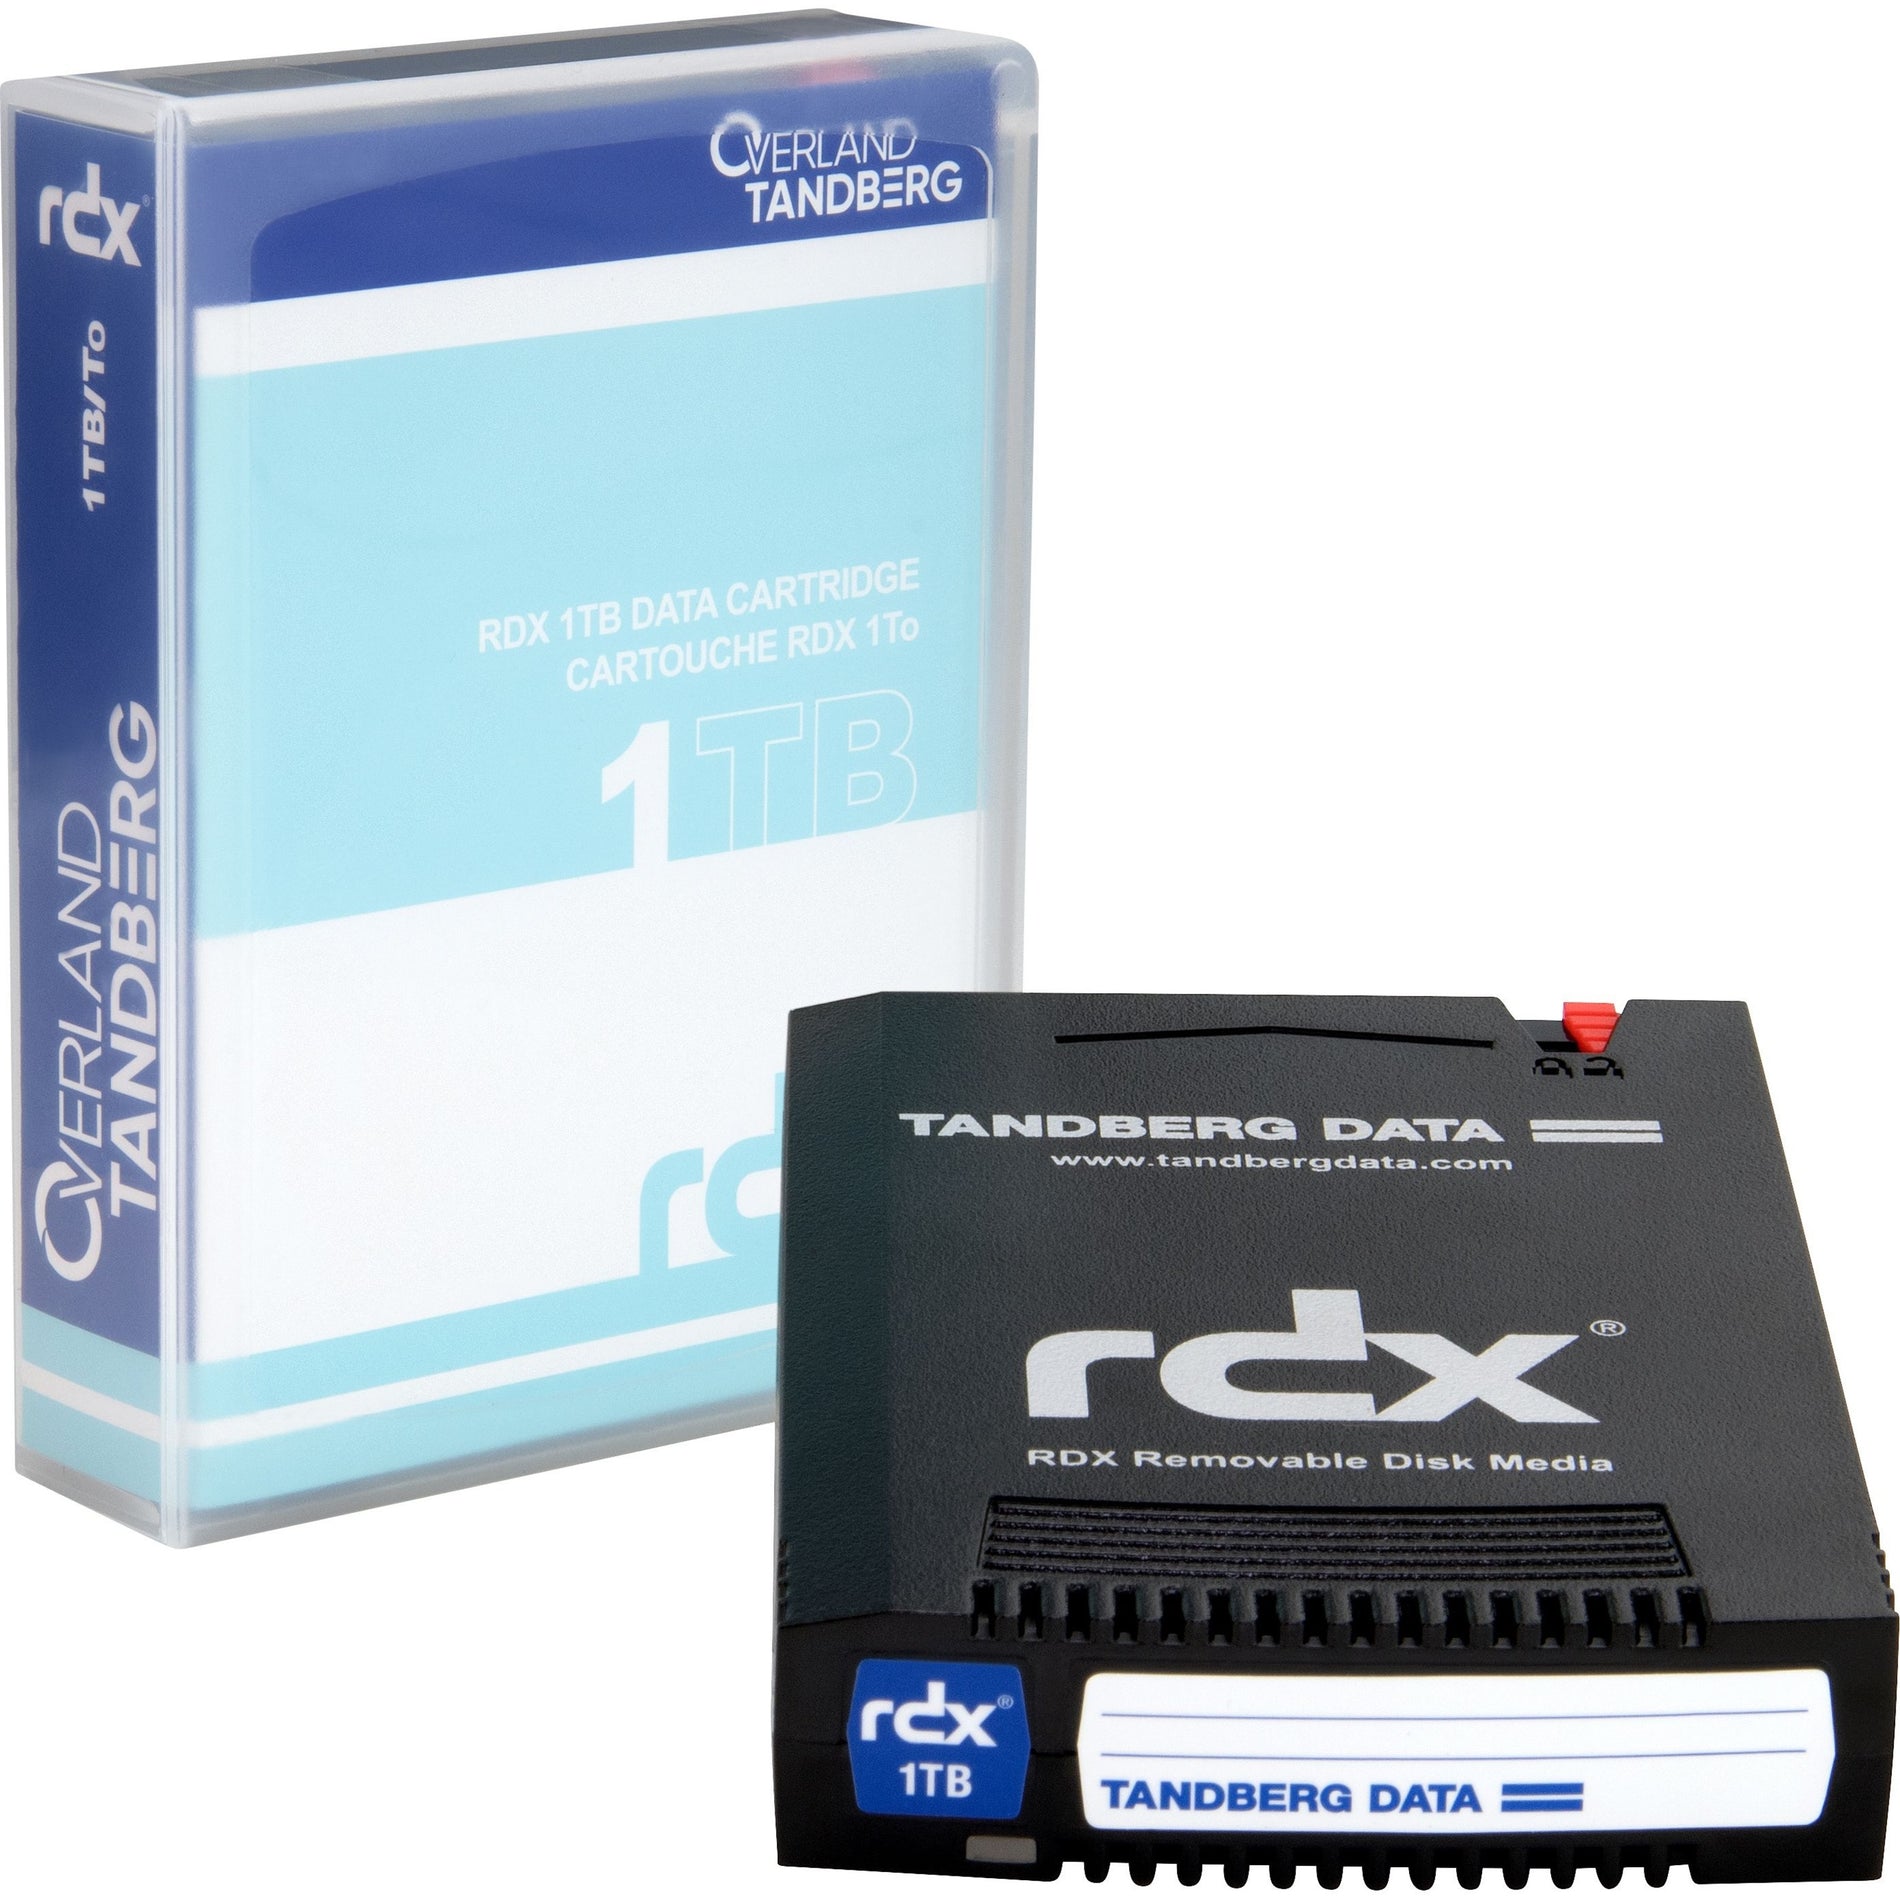 Overland-Tandberg 8586-RDX QuikStor Cartridge Hard Drive, 1TB Storage Capacity [Discontinued]